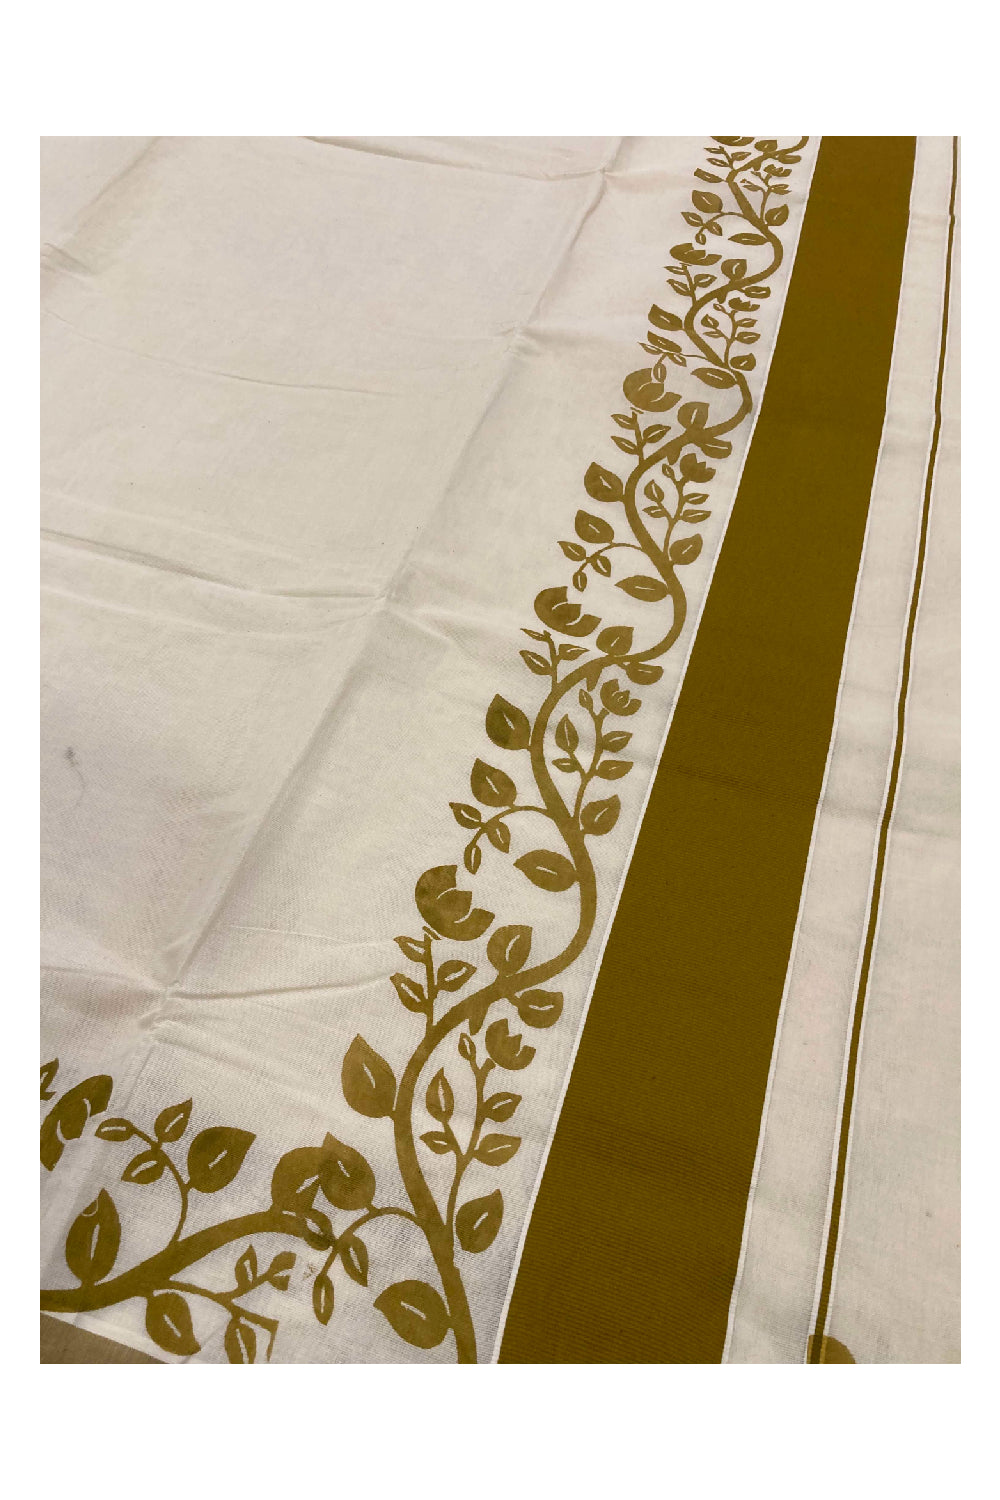 Southloom Original Design Kerala Saree with Khaki Colour Floral Vines Block Print